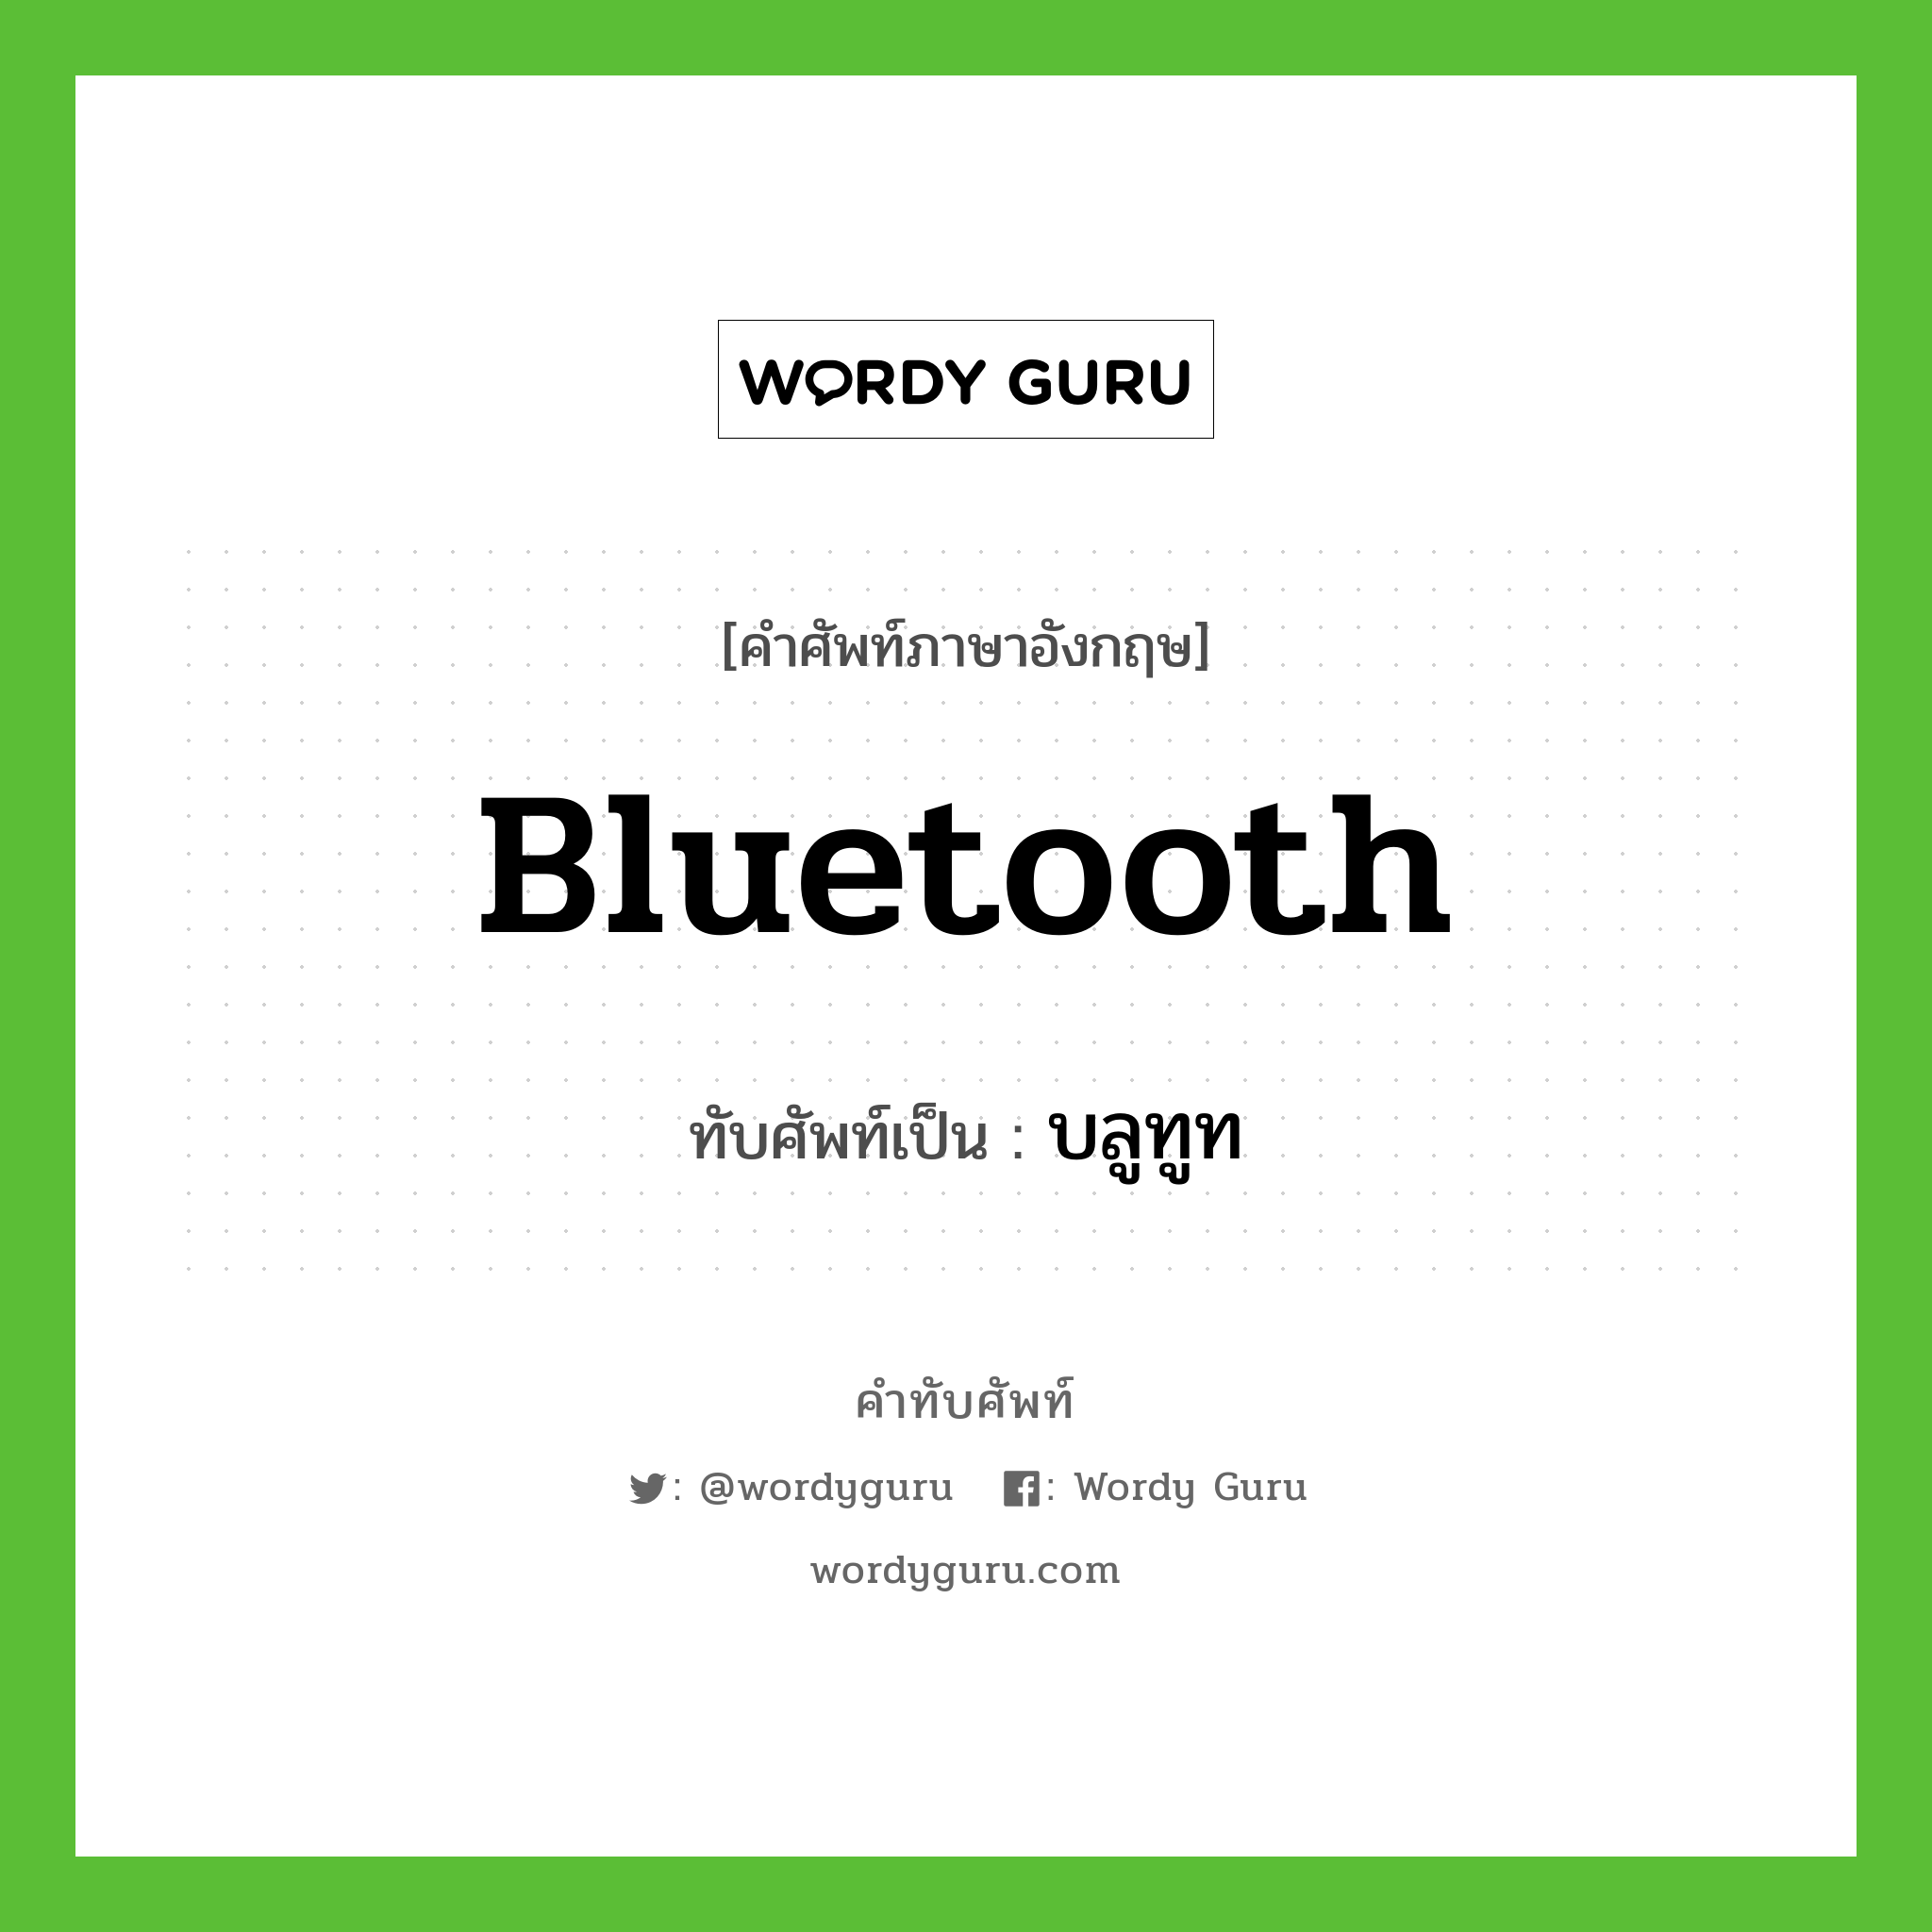 Bluetooth เขียนเป็นคำไทยว่าอะไร?, คำศัพท์ภาษาอังกฤษ Bluetooth ทับศัพท์เป็น บลูทูท